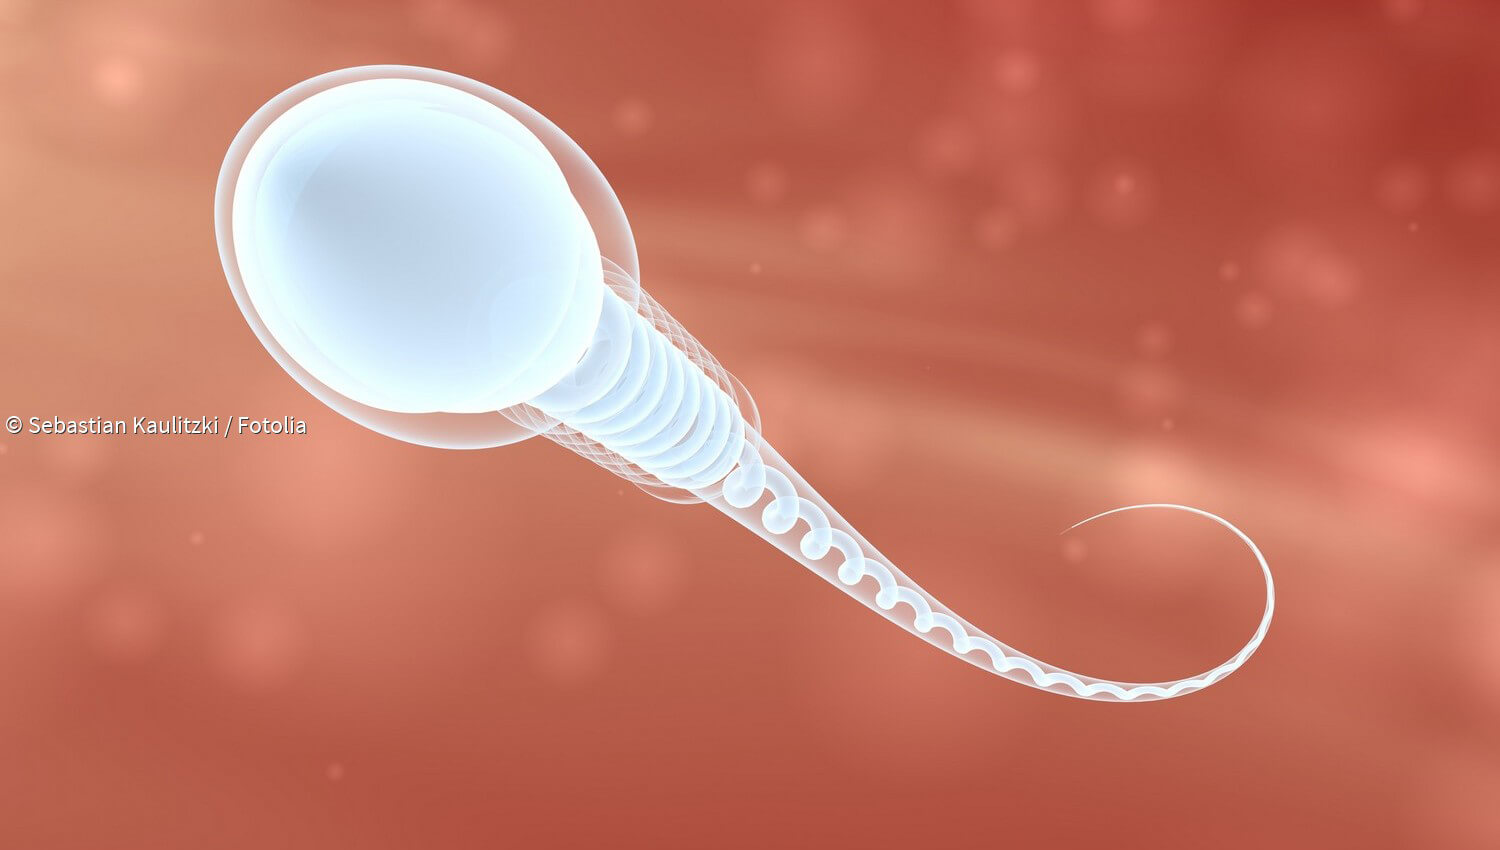 сперма во влагалище у детей фото 113